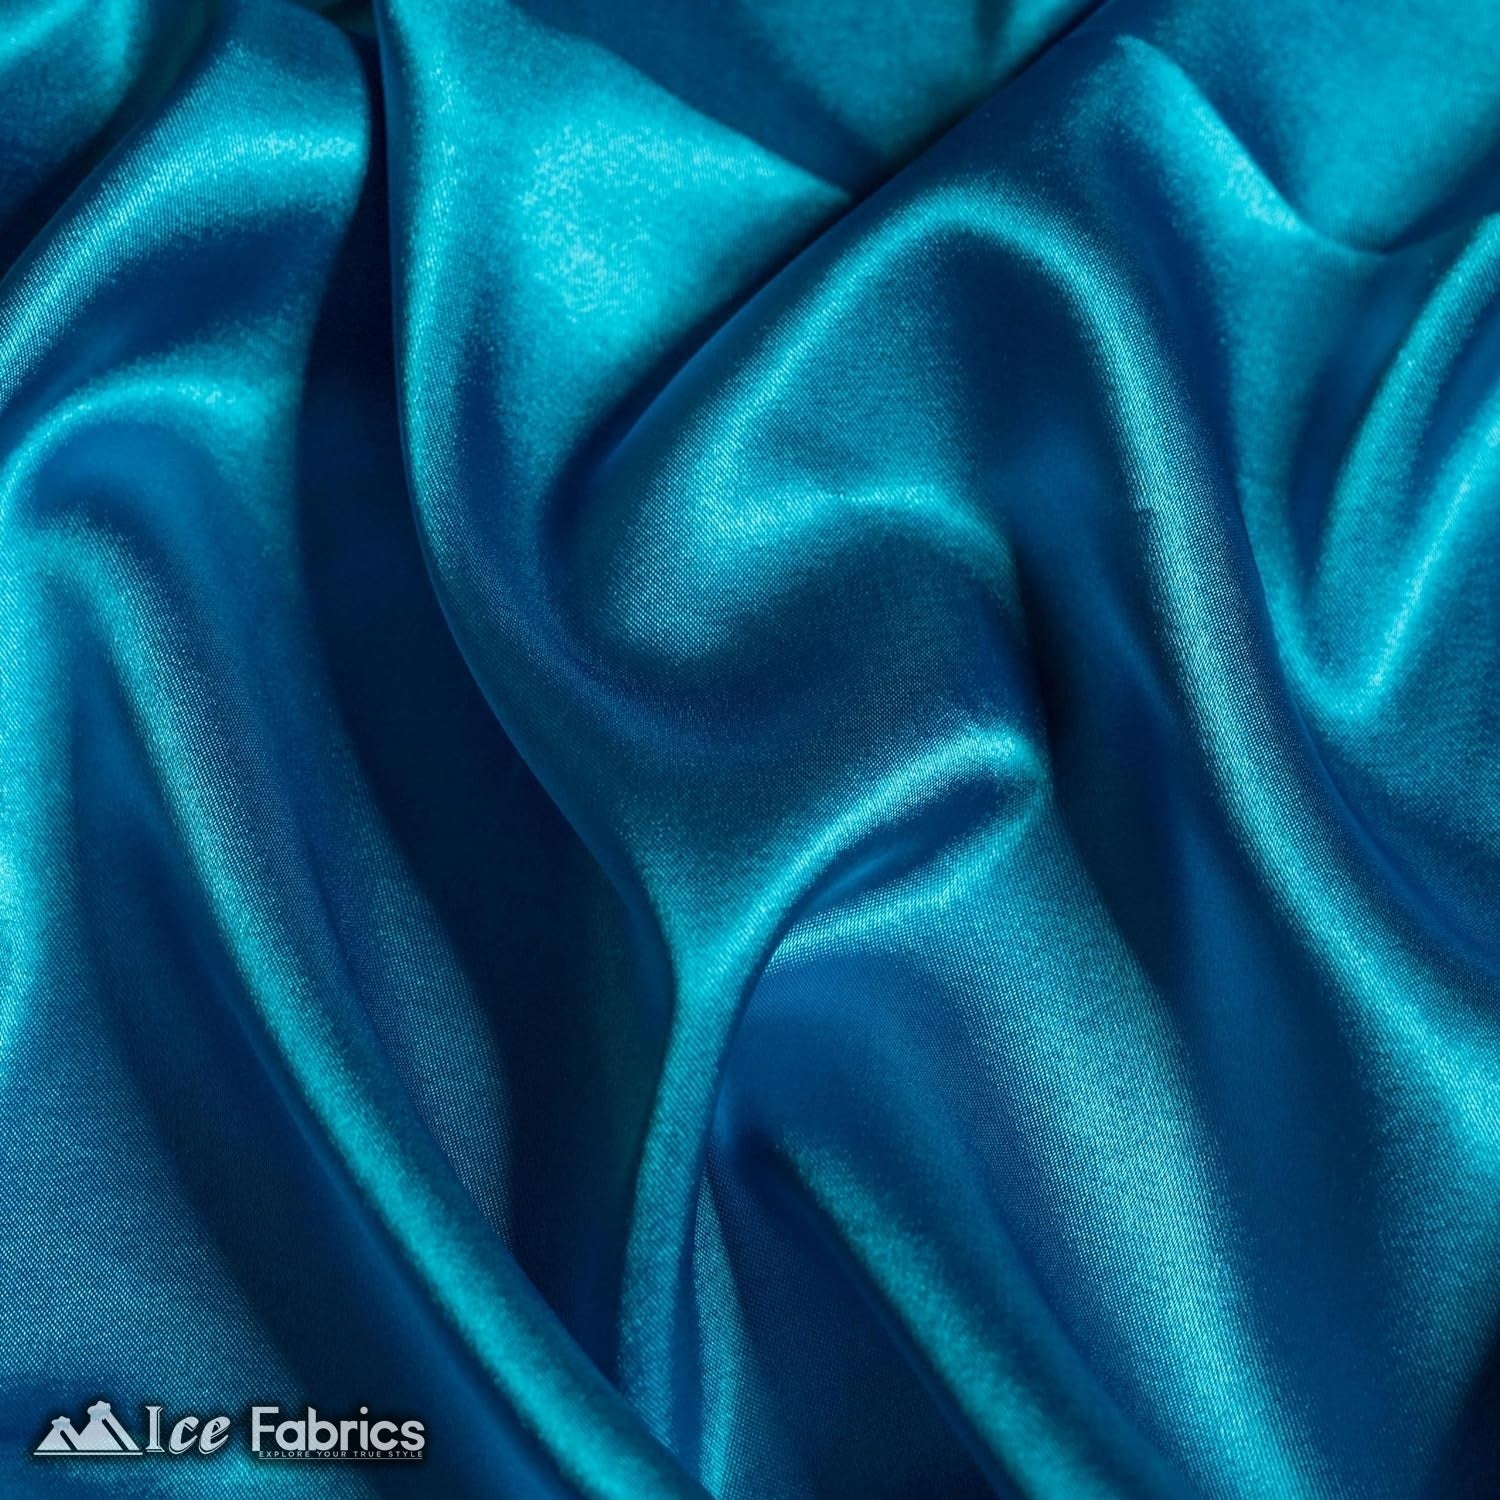 New Shiny Turquoise Charmeuse Stretch Satin FabricICE FABRICSICE FABRICSBy The Yard (60" Wide)New Shiny Turquoise Charmeuse Stretch Satin Fabric